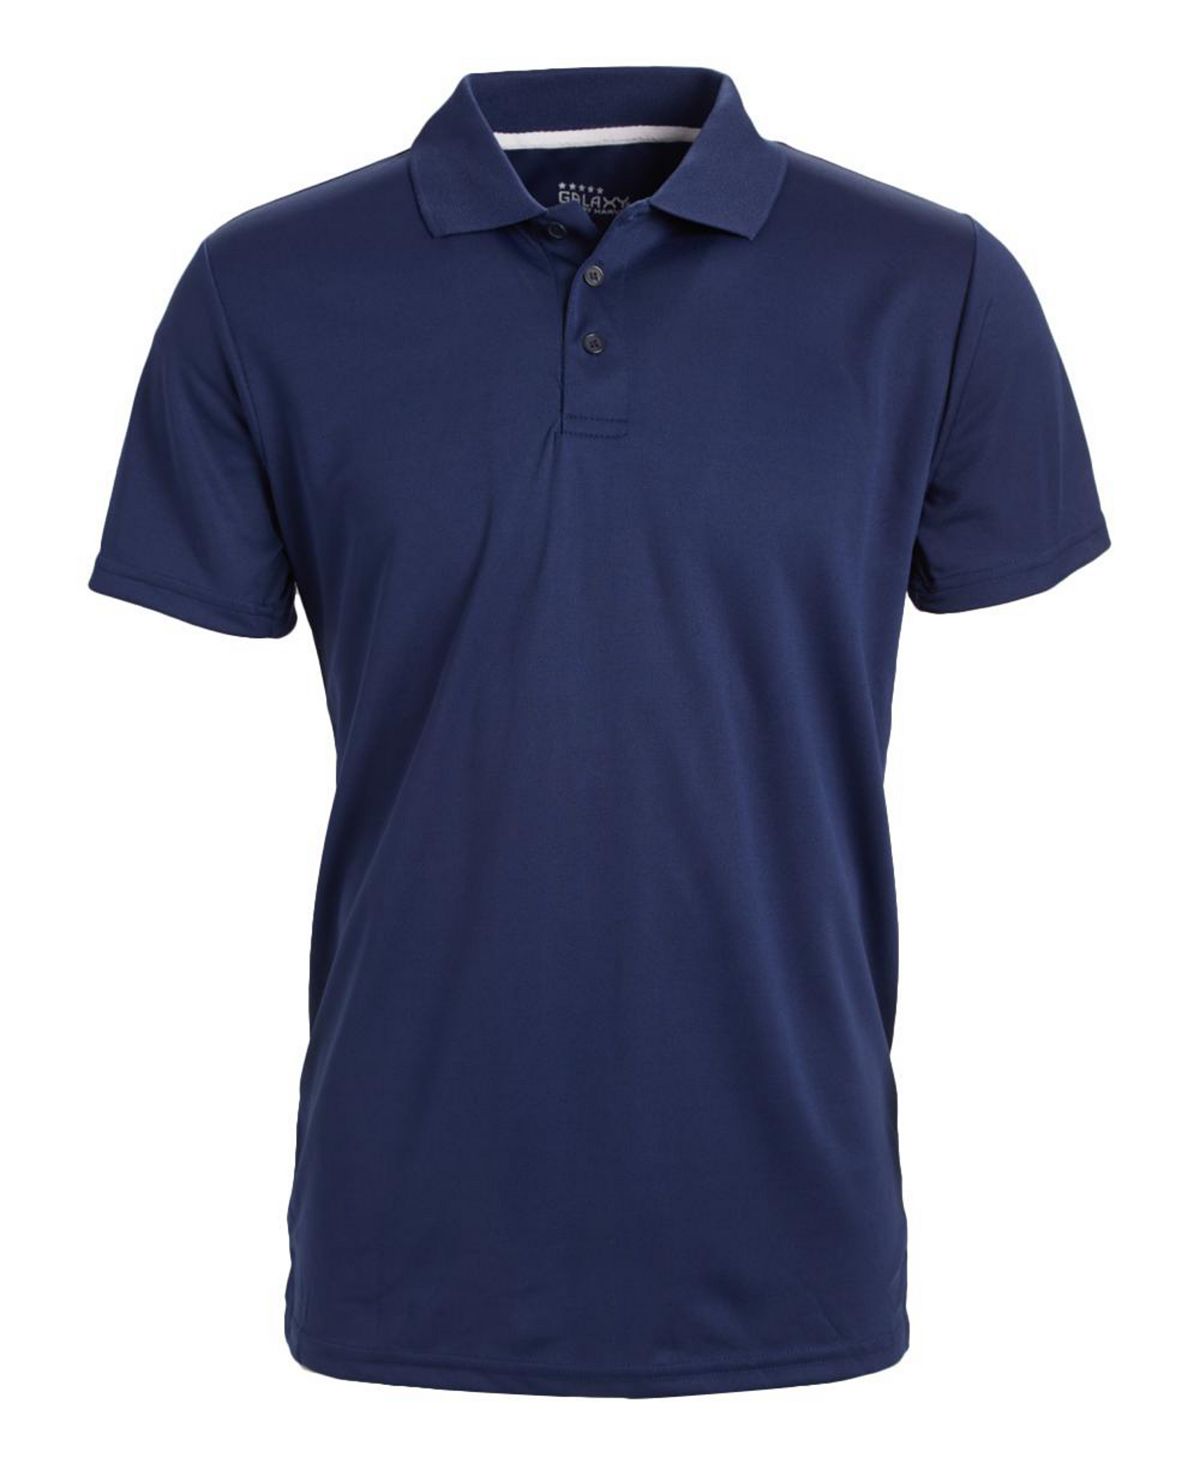 цена Мужская влагоотводящая рубашка поло сухой посадки без тегов Galaxy By Harvic, синий